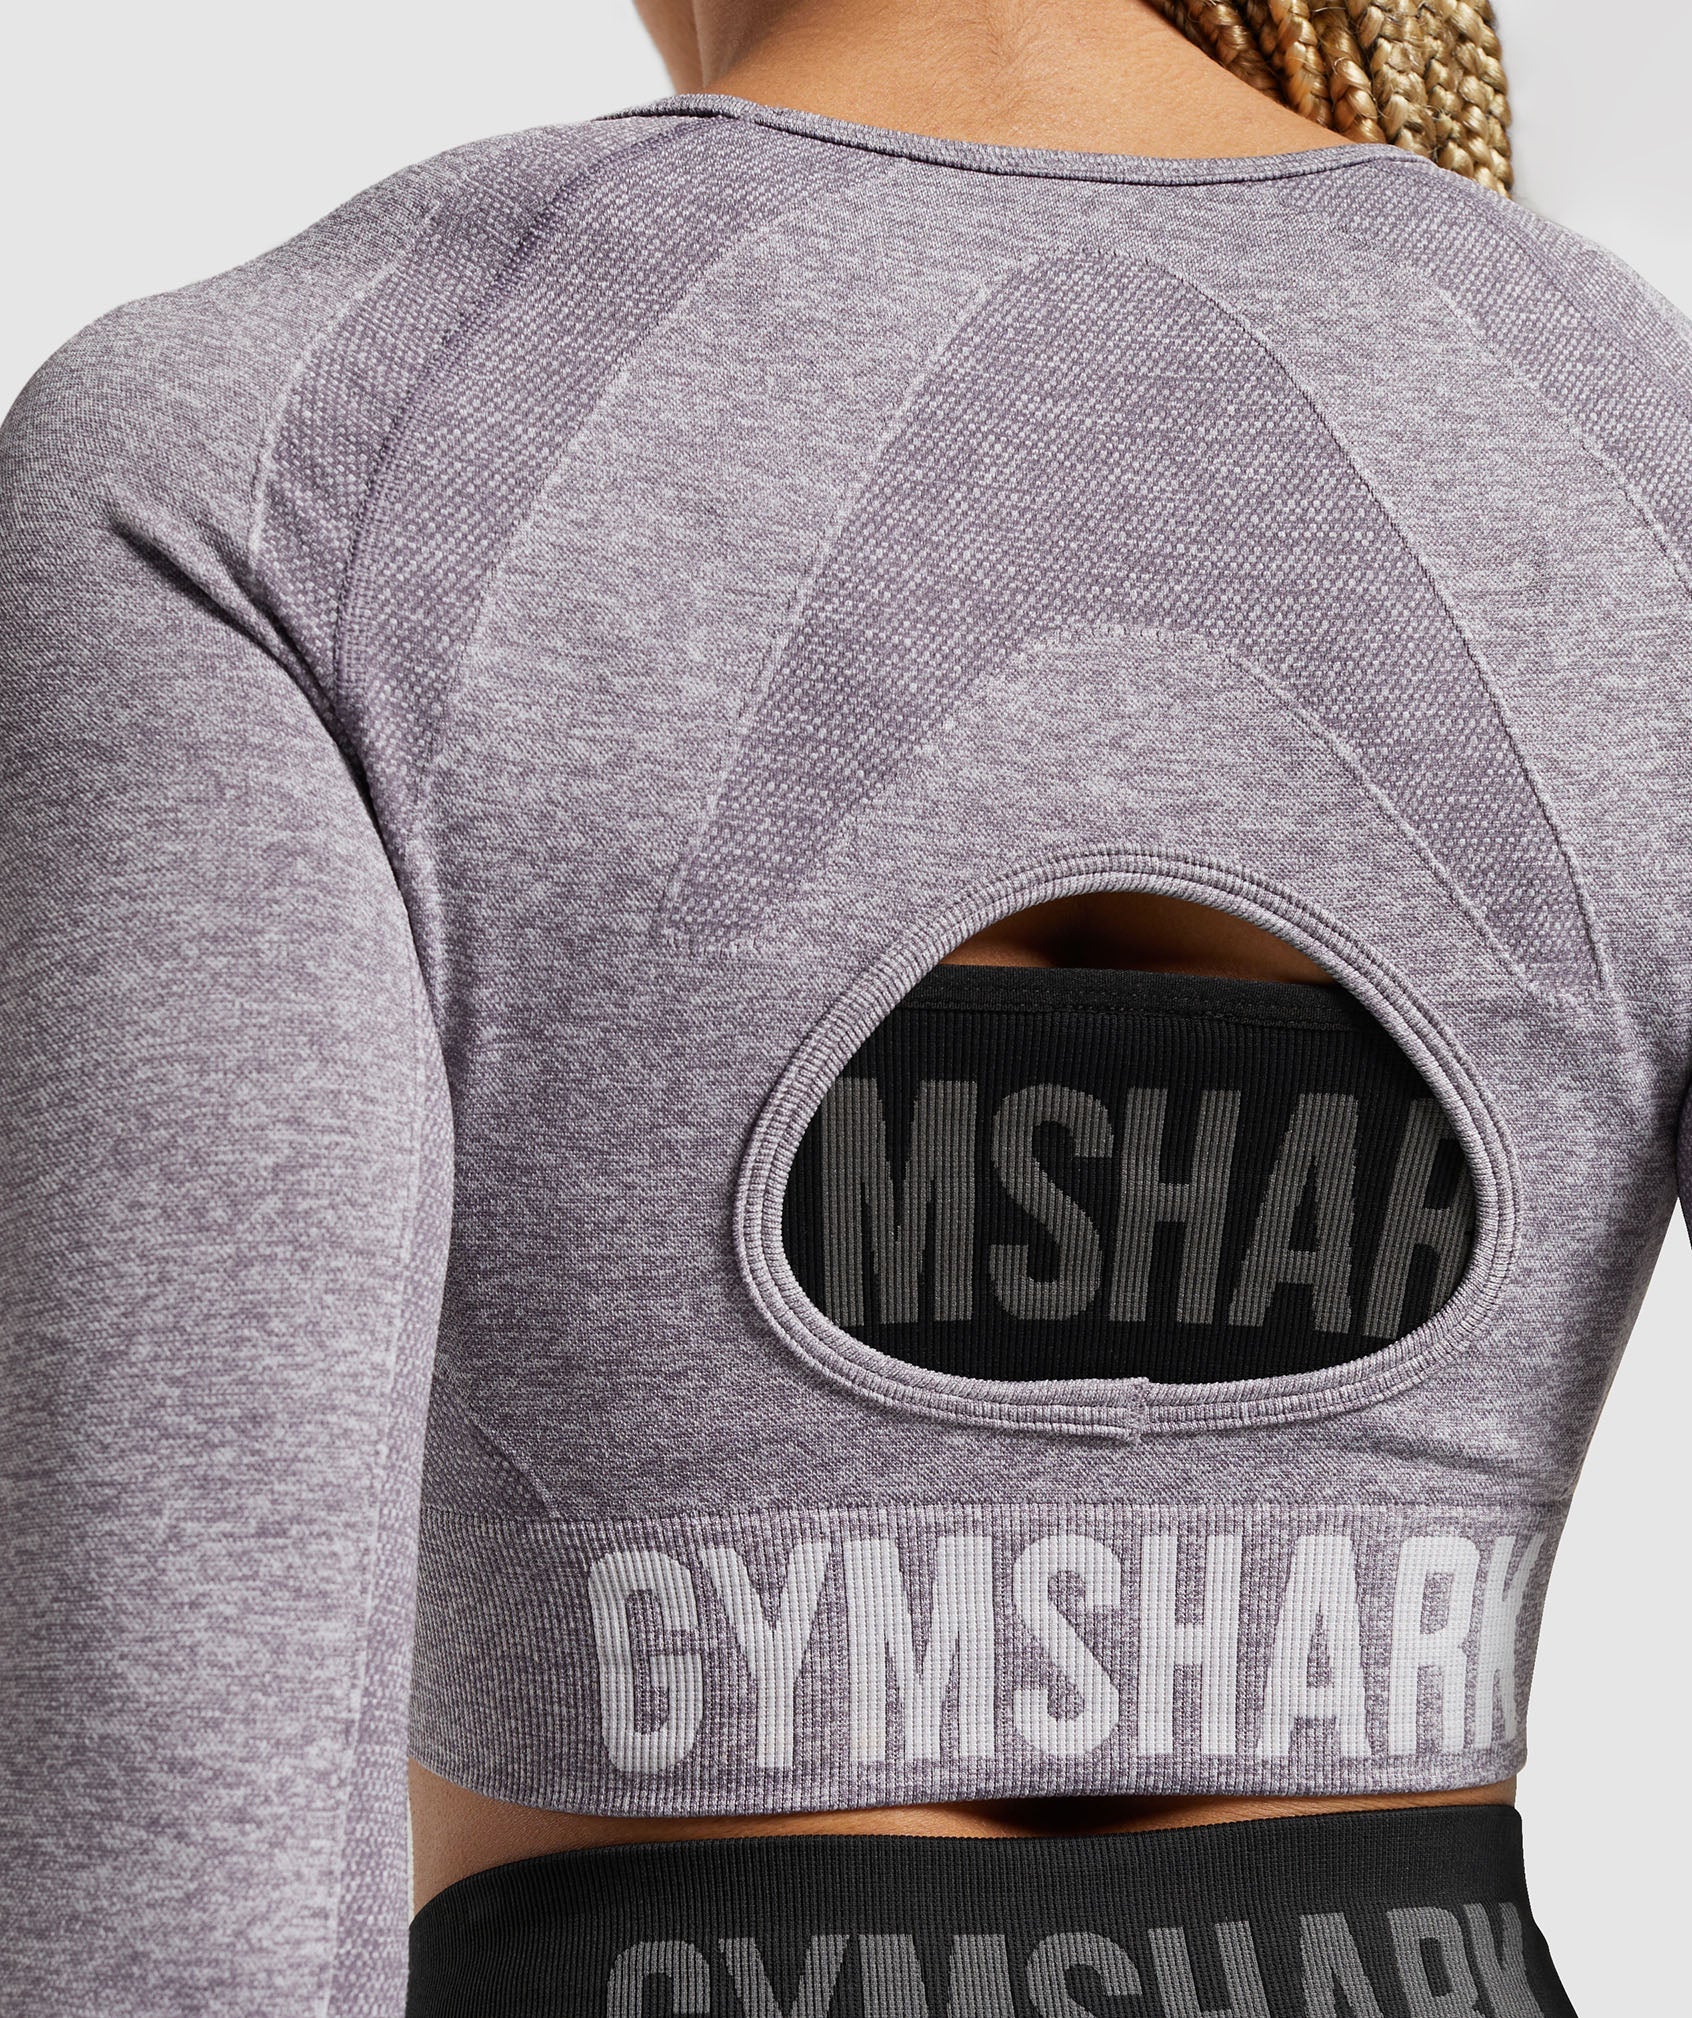 Gymshark Flex Long Sleeve Crop Top Purple Size L - $22 (45% Off